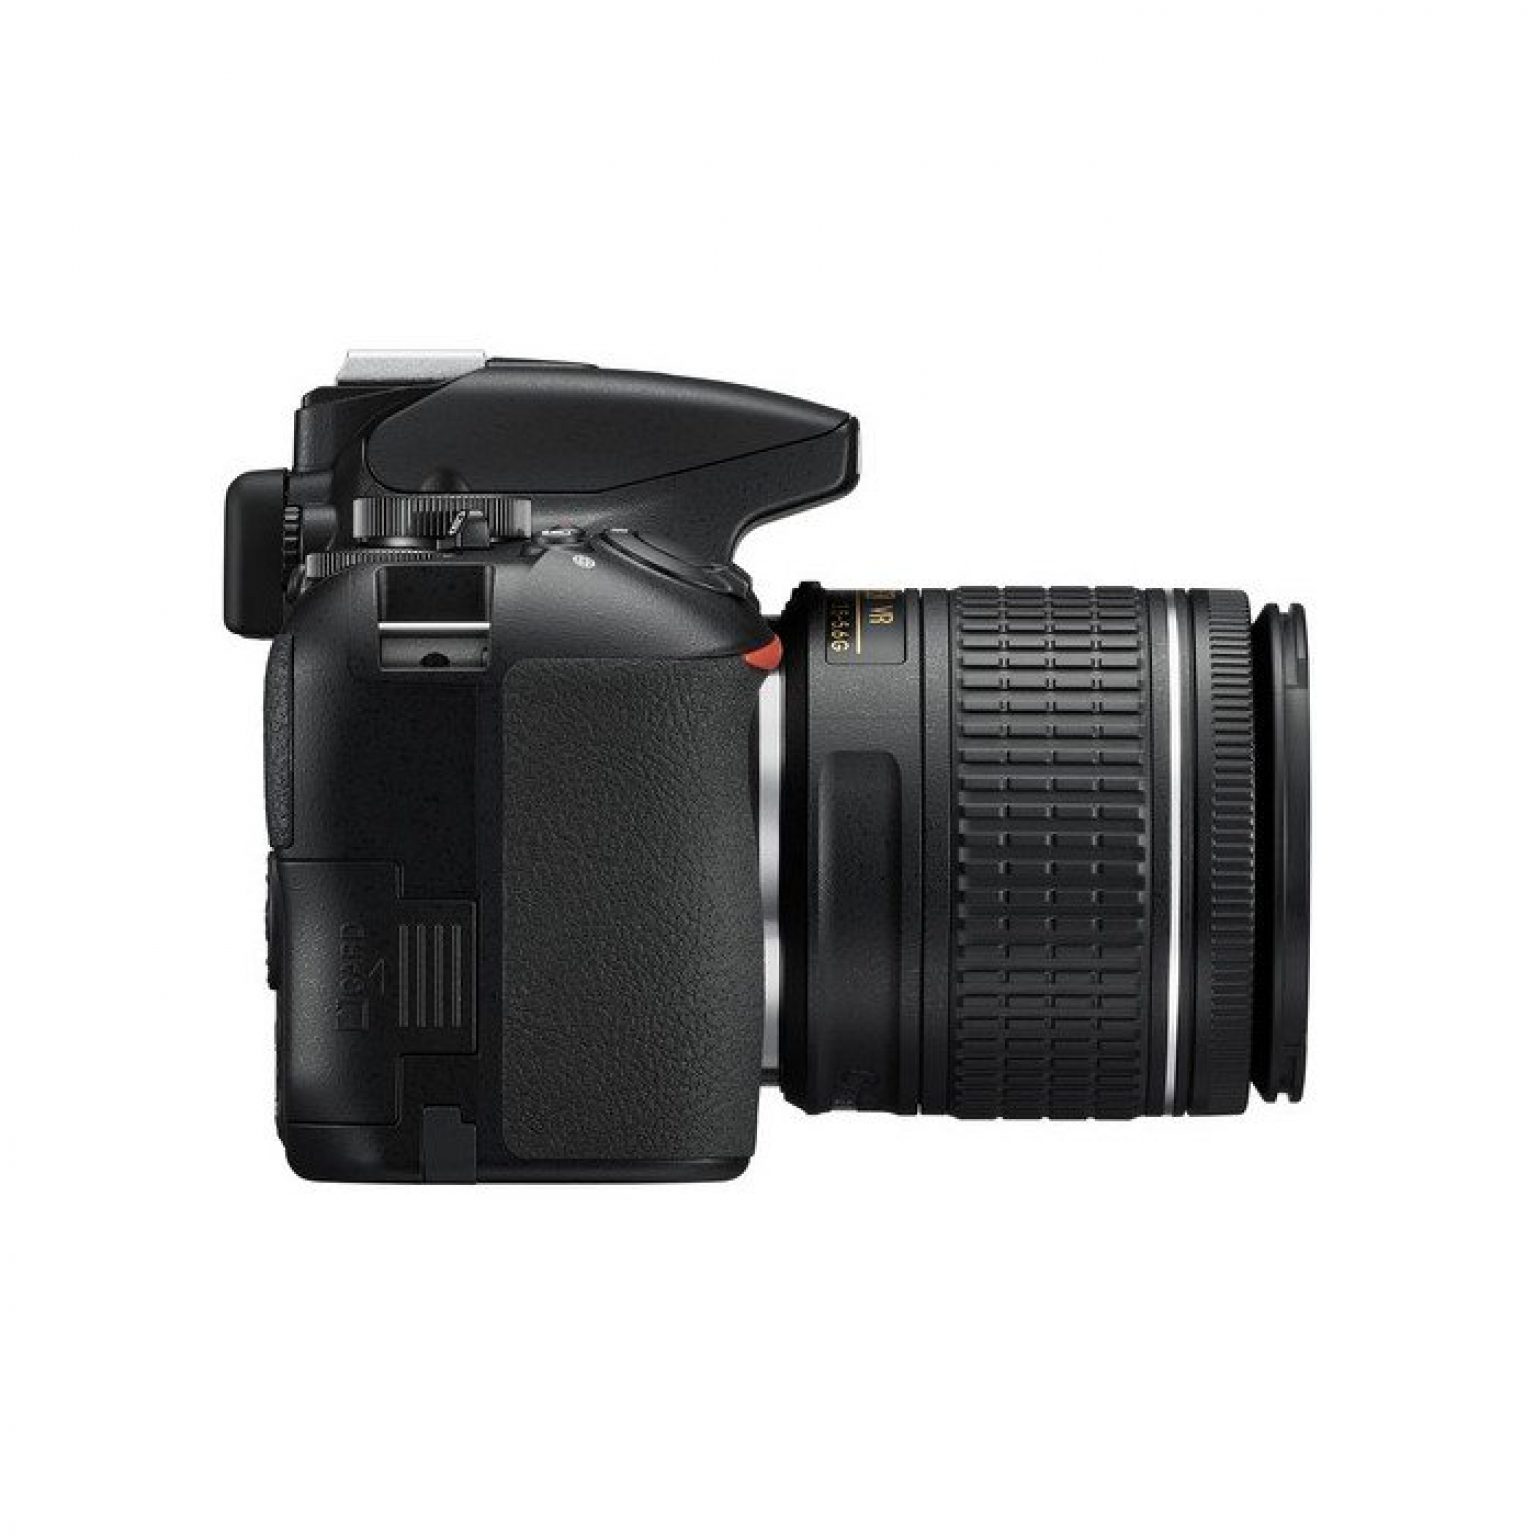 Nikon D3500 DSLR Camera with 18 55mm 6